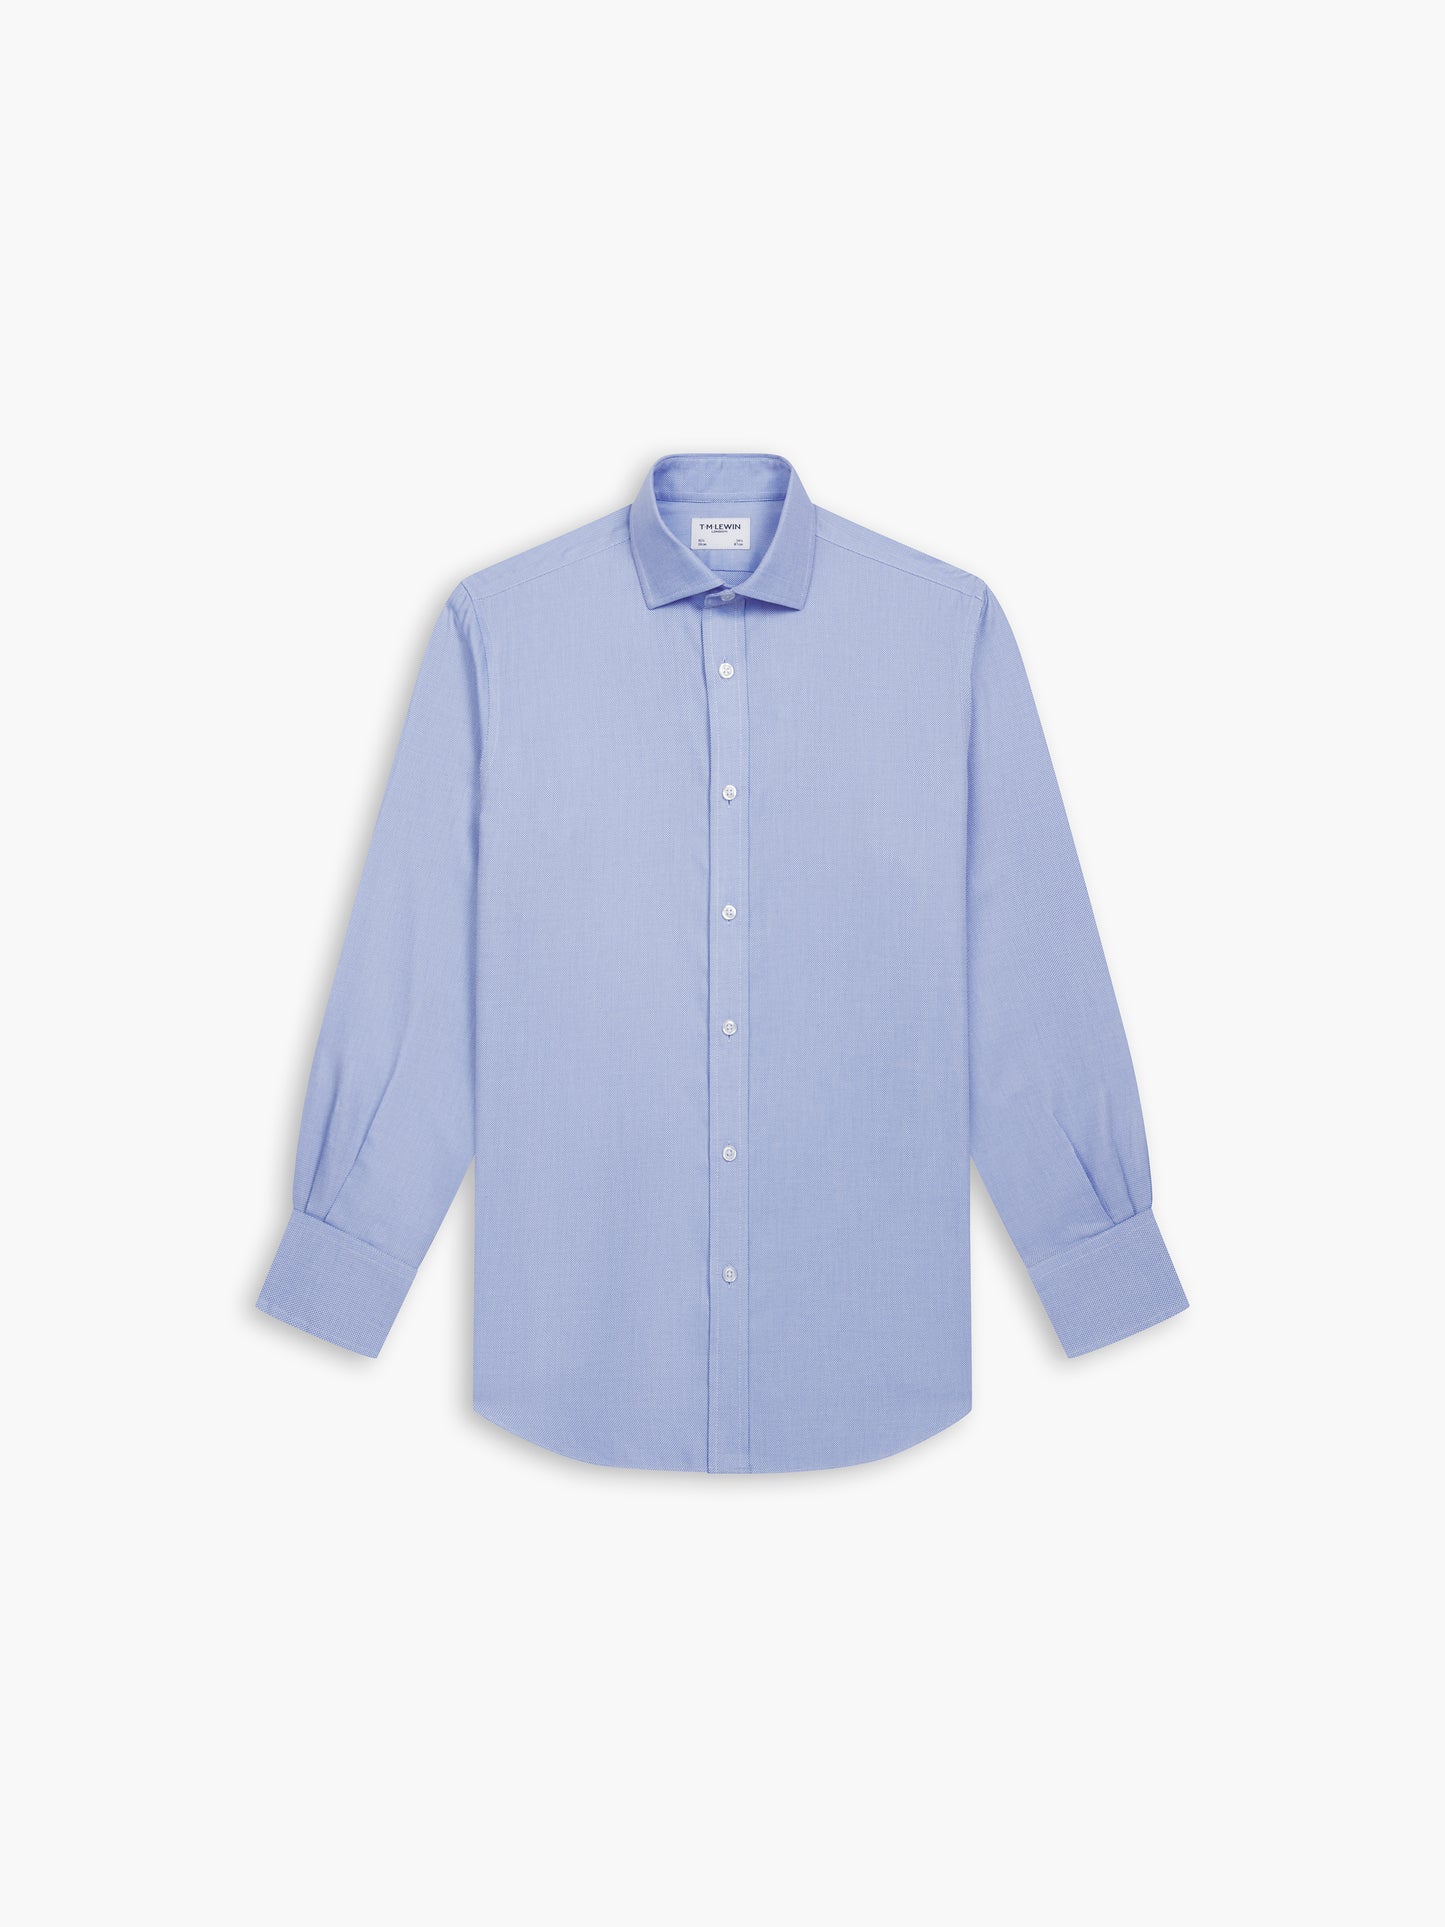 Non-Iron Blue Oxford Slim Fit Single Cuff Classic Collar Shirt